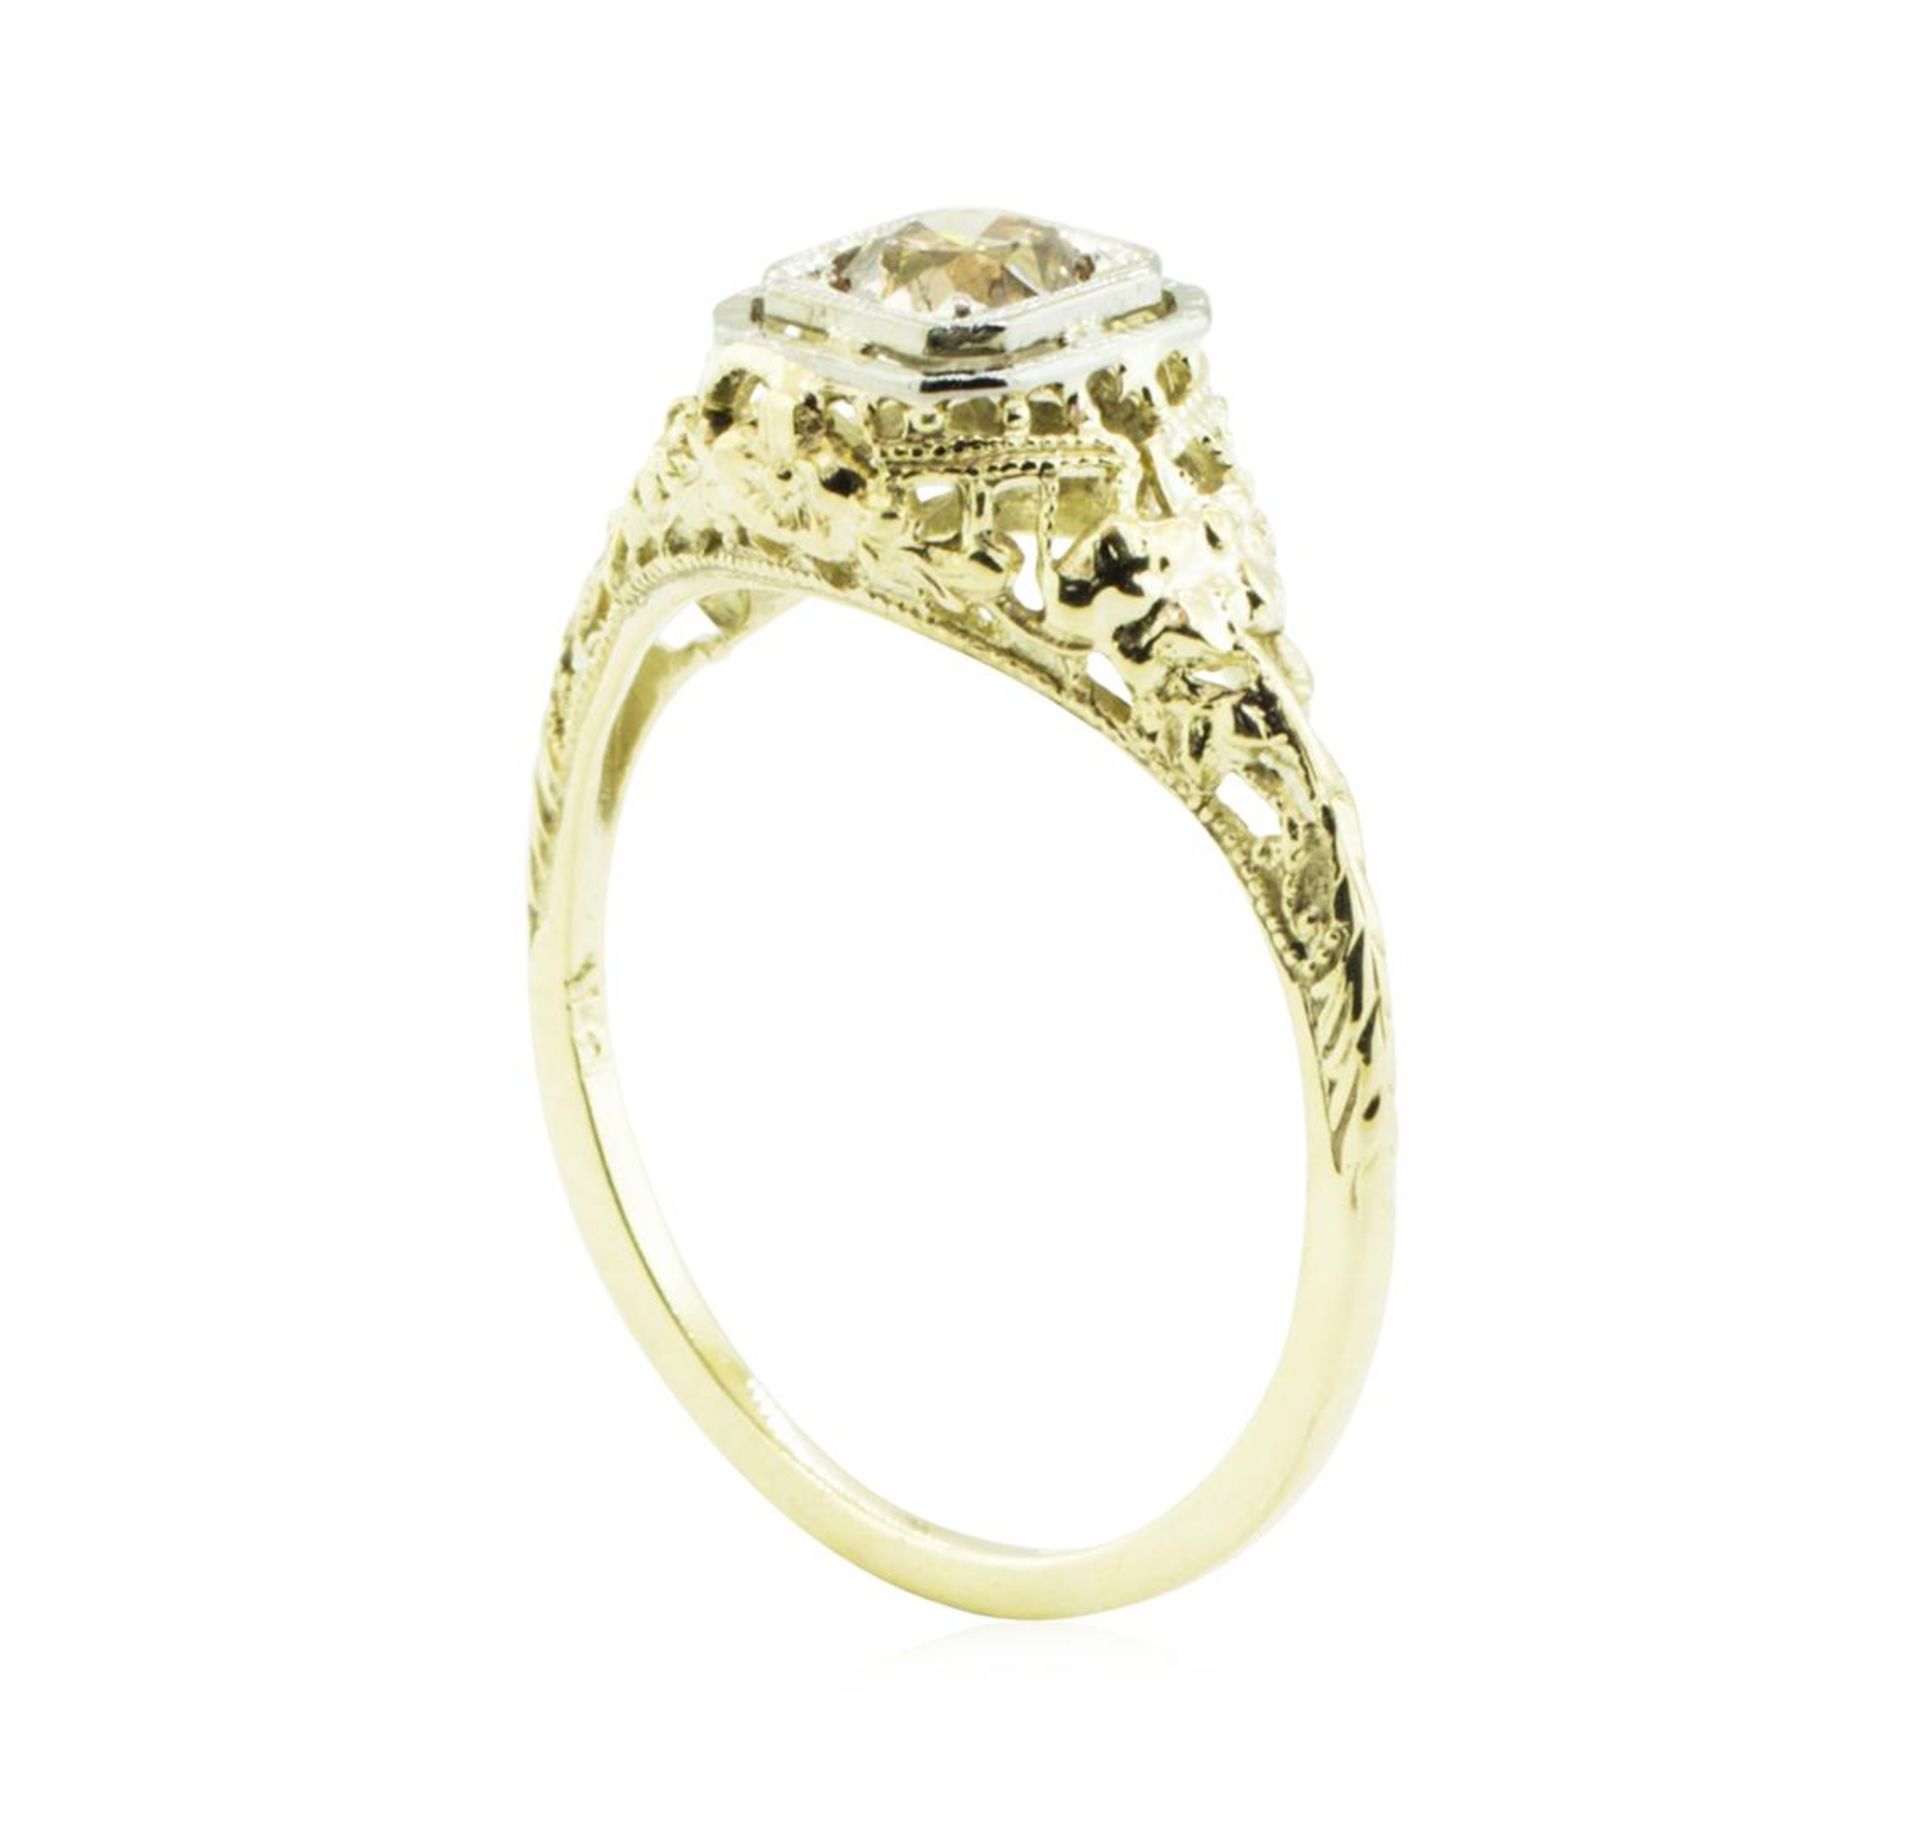 0.30 ctw Diamond Ring - 14KT Yellow Gold - Image 4 of 4